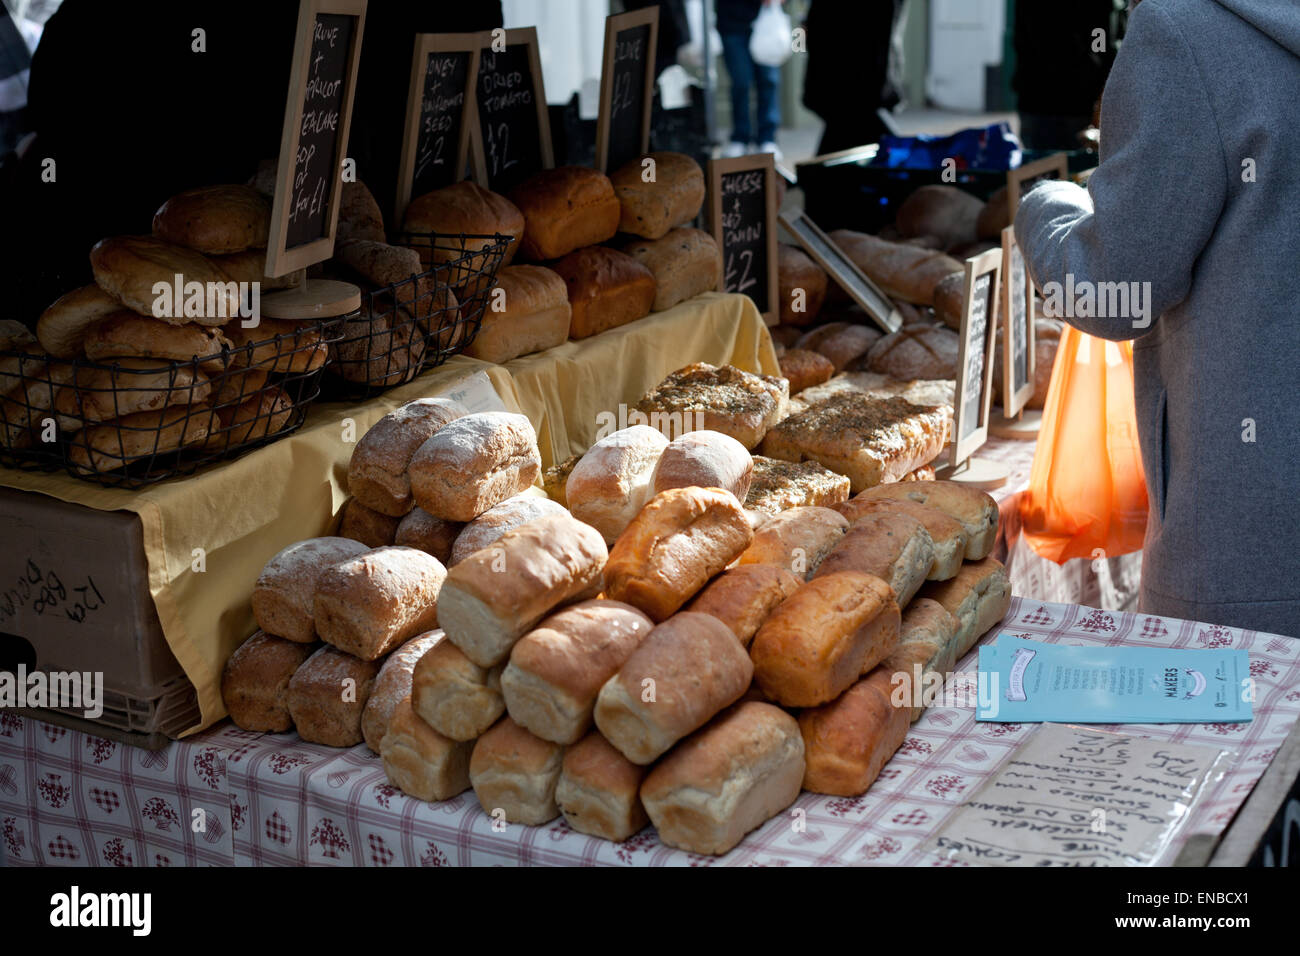 Bread stall food market Stock Photo